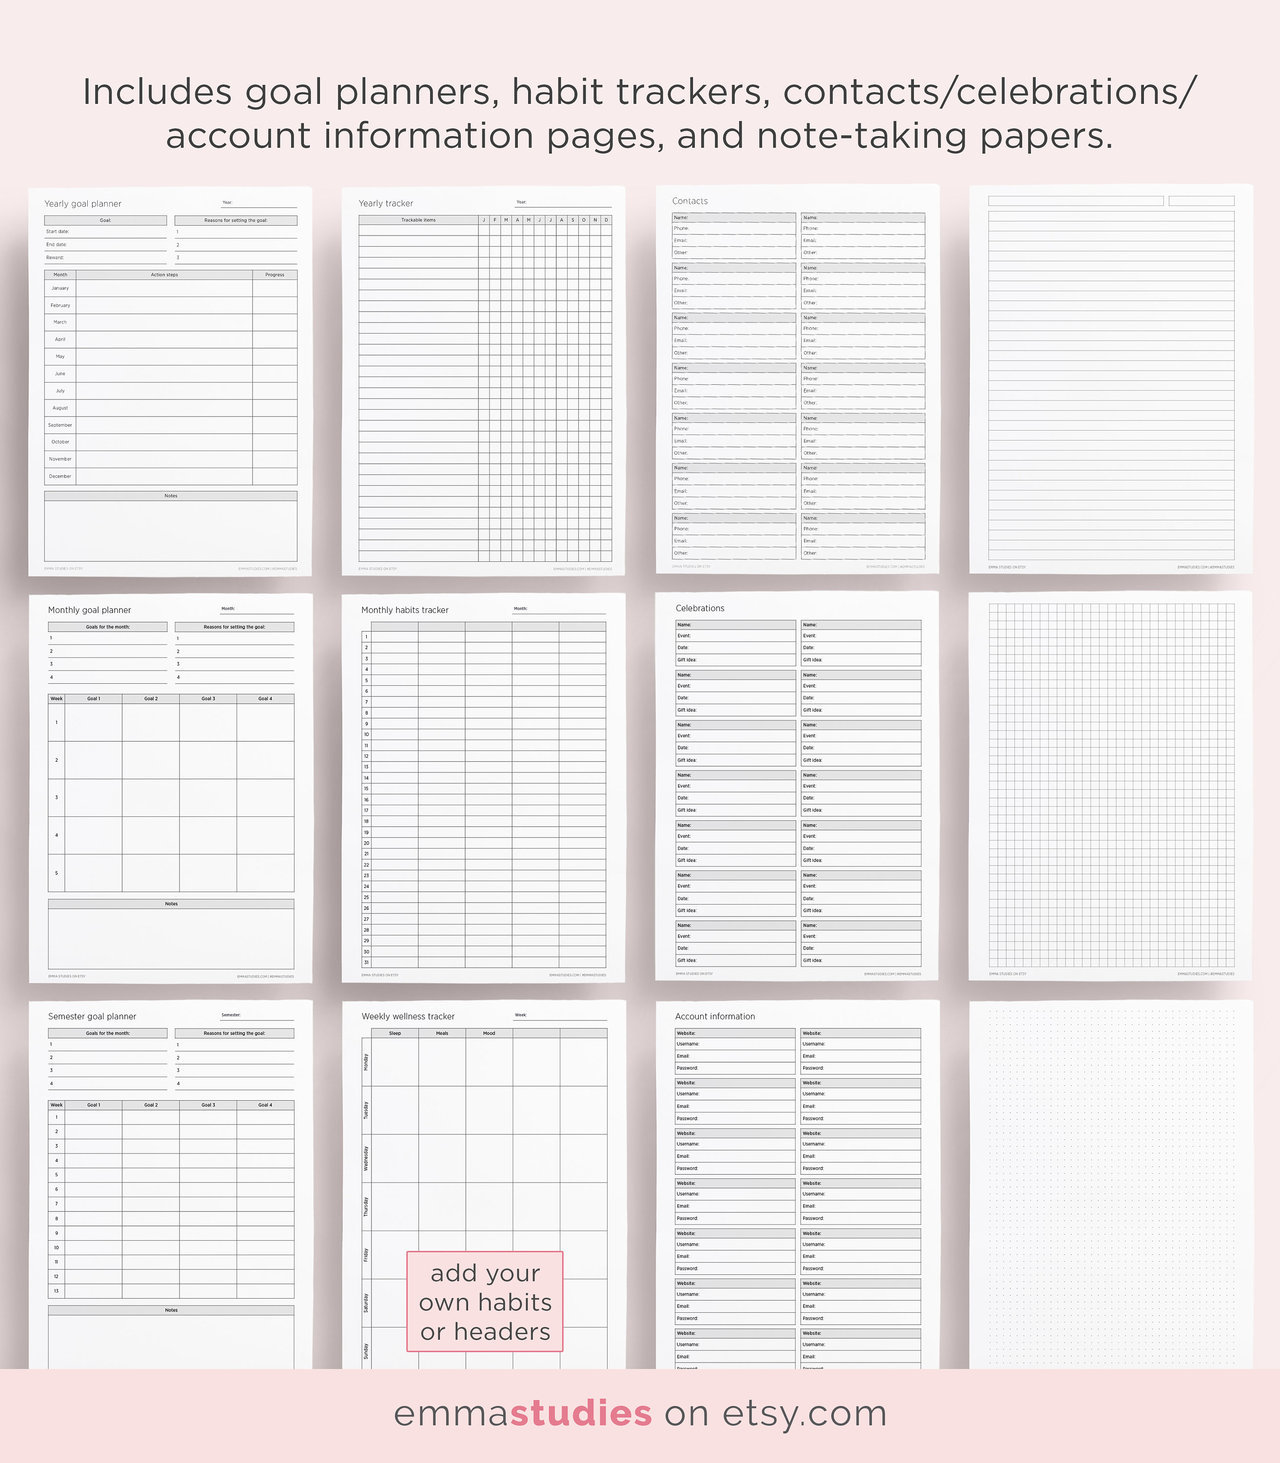 emmastudies 2019 Student Printable Planner Here... Studyblr